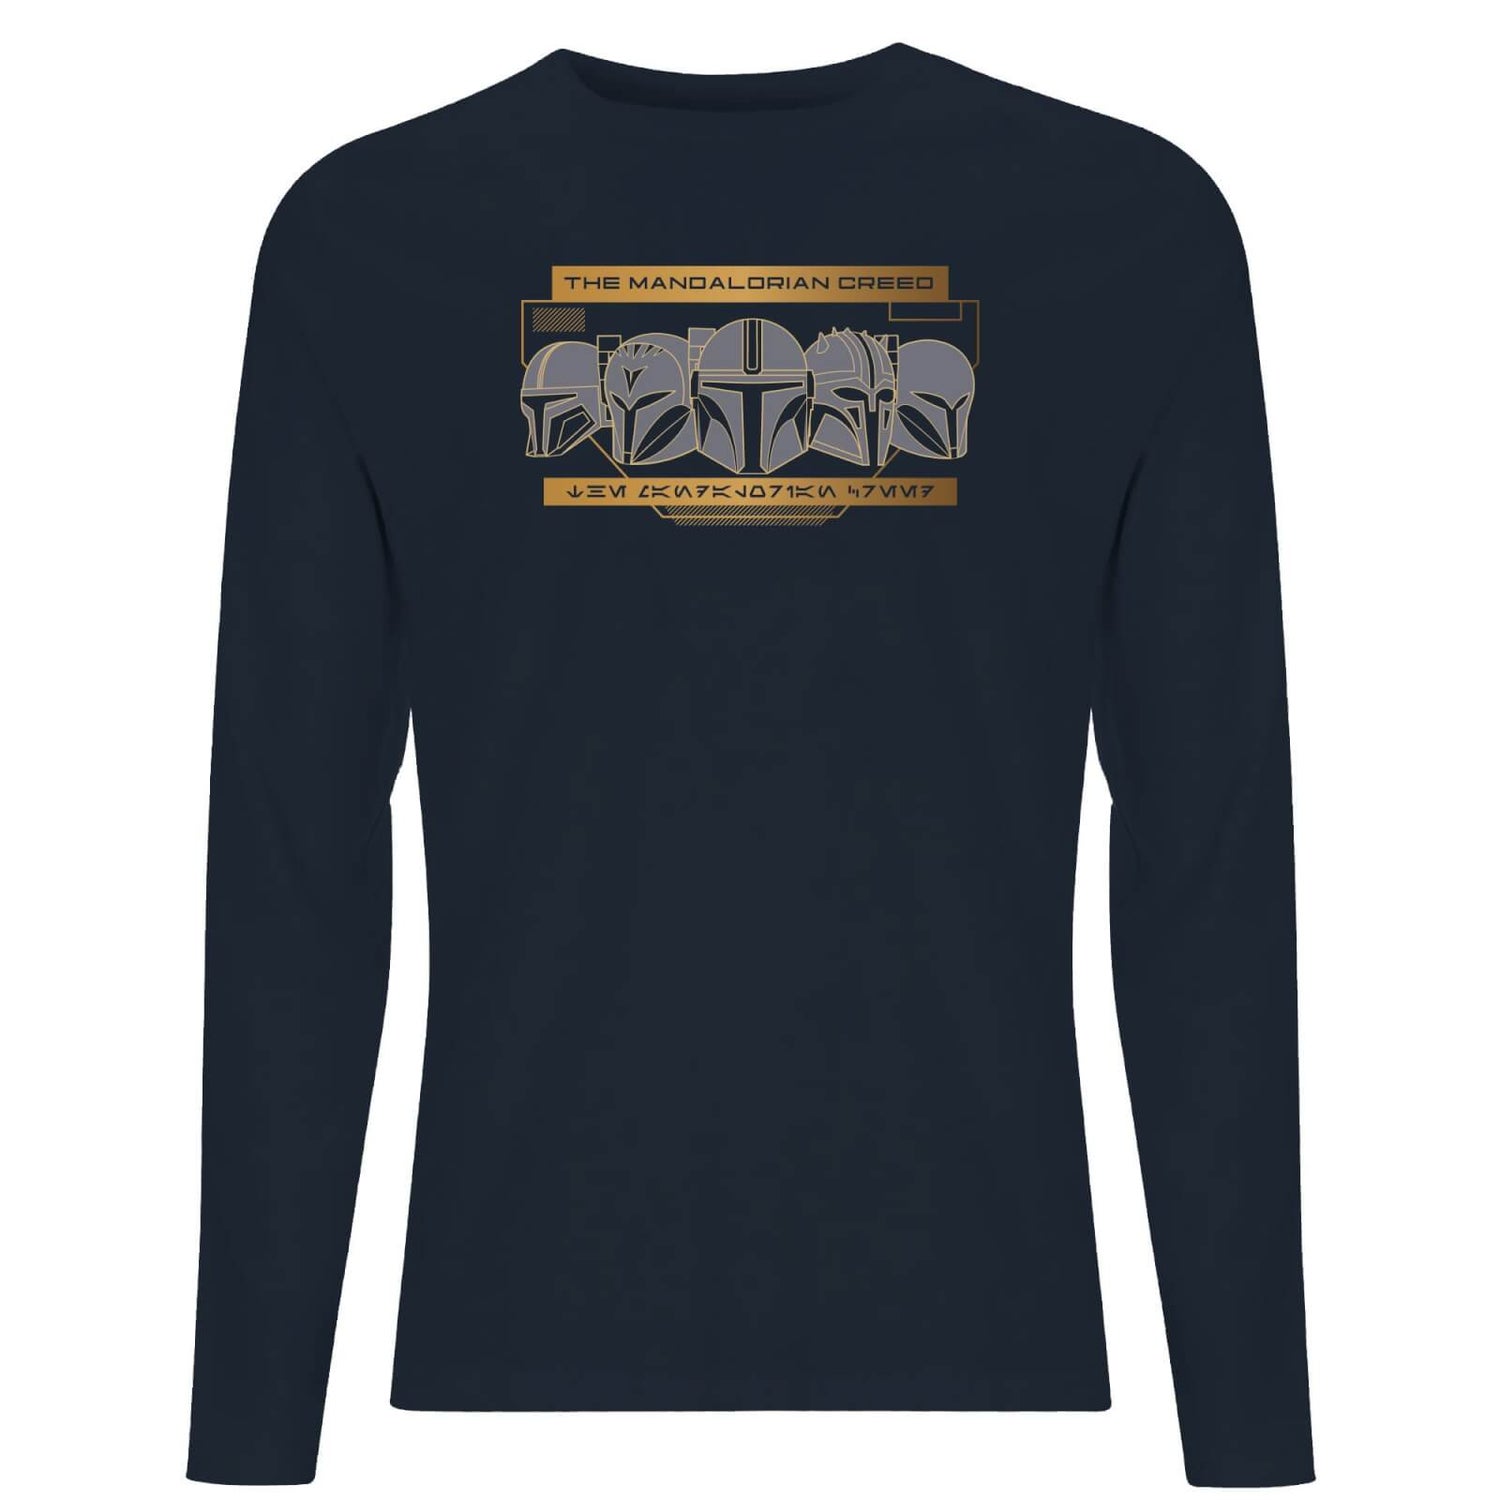 Star Wars The Mandalorian Creed Men's Long Sleeve T-Shirt - Navy